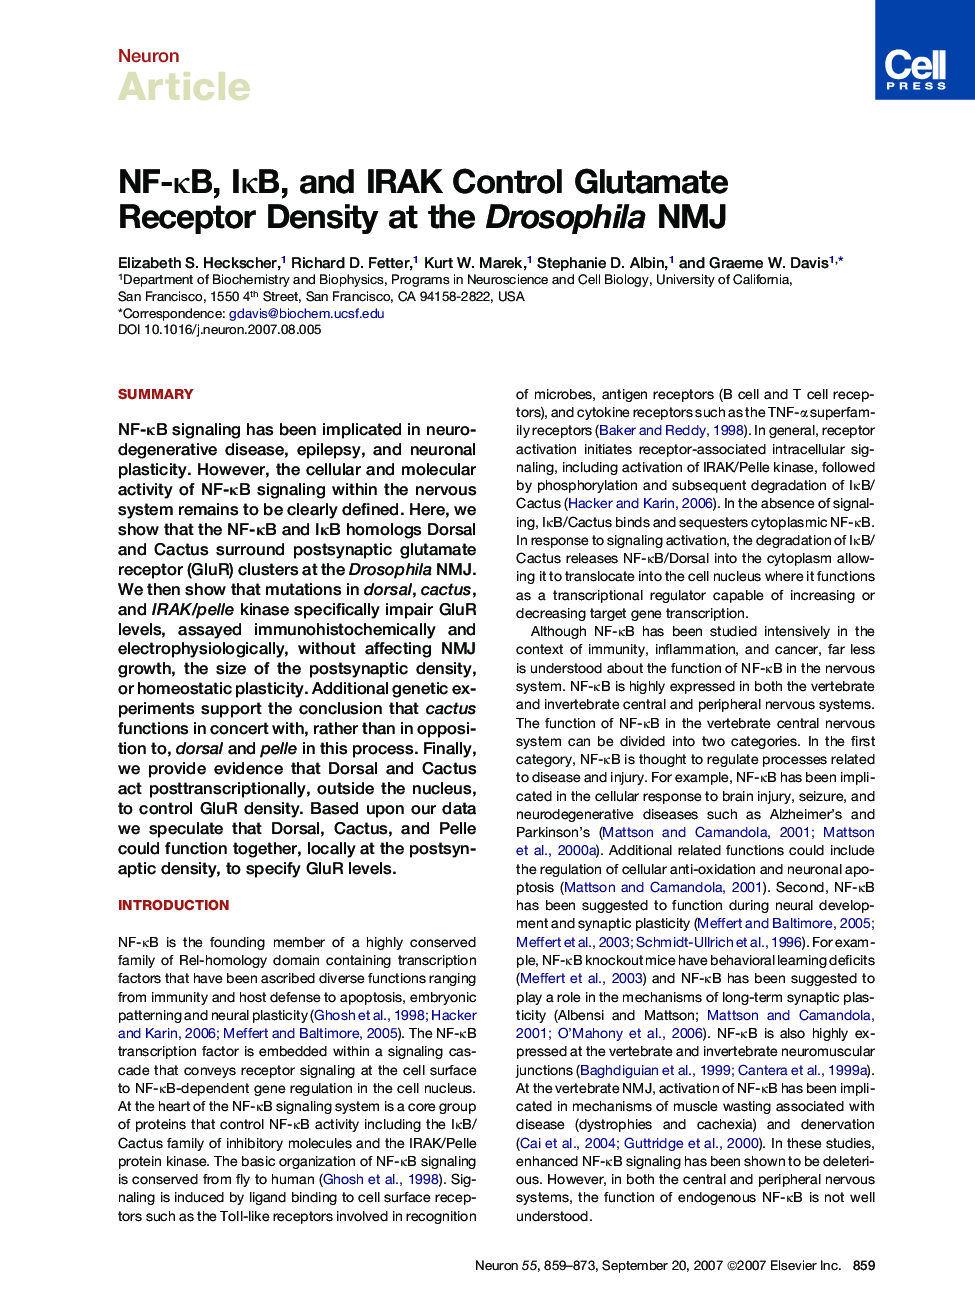 NF-κB, IκB, and IRAK Control Glutamate Receptor Density at the Drosophila NMJ